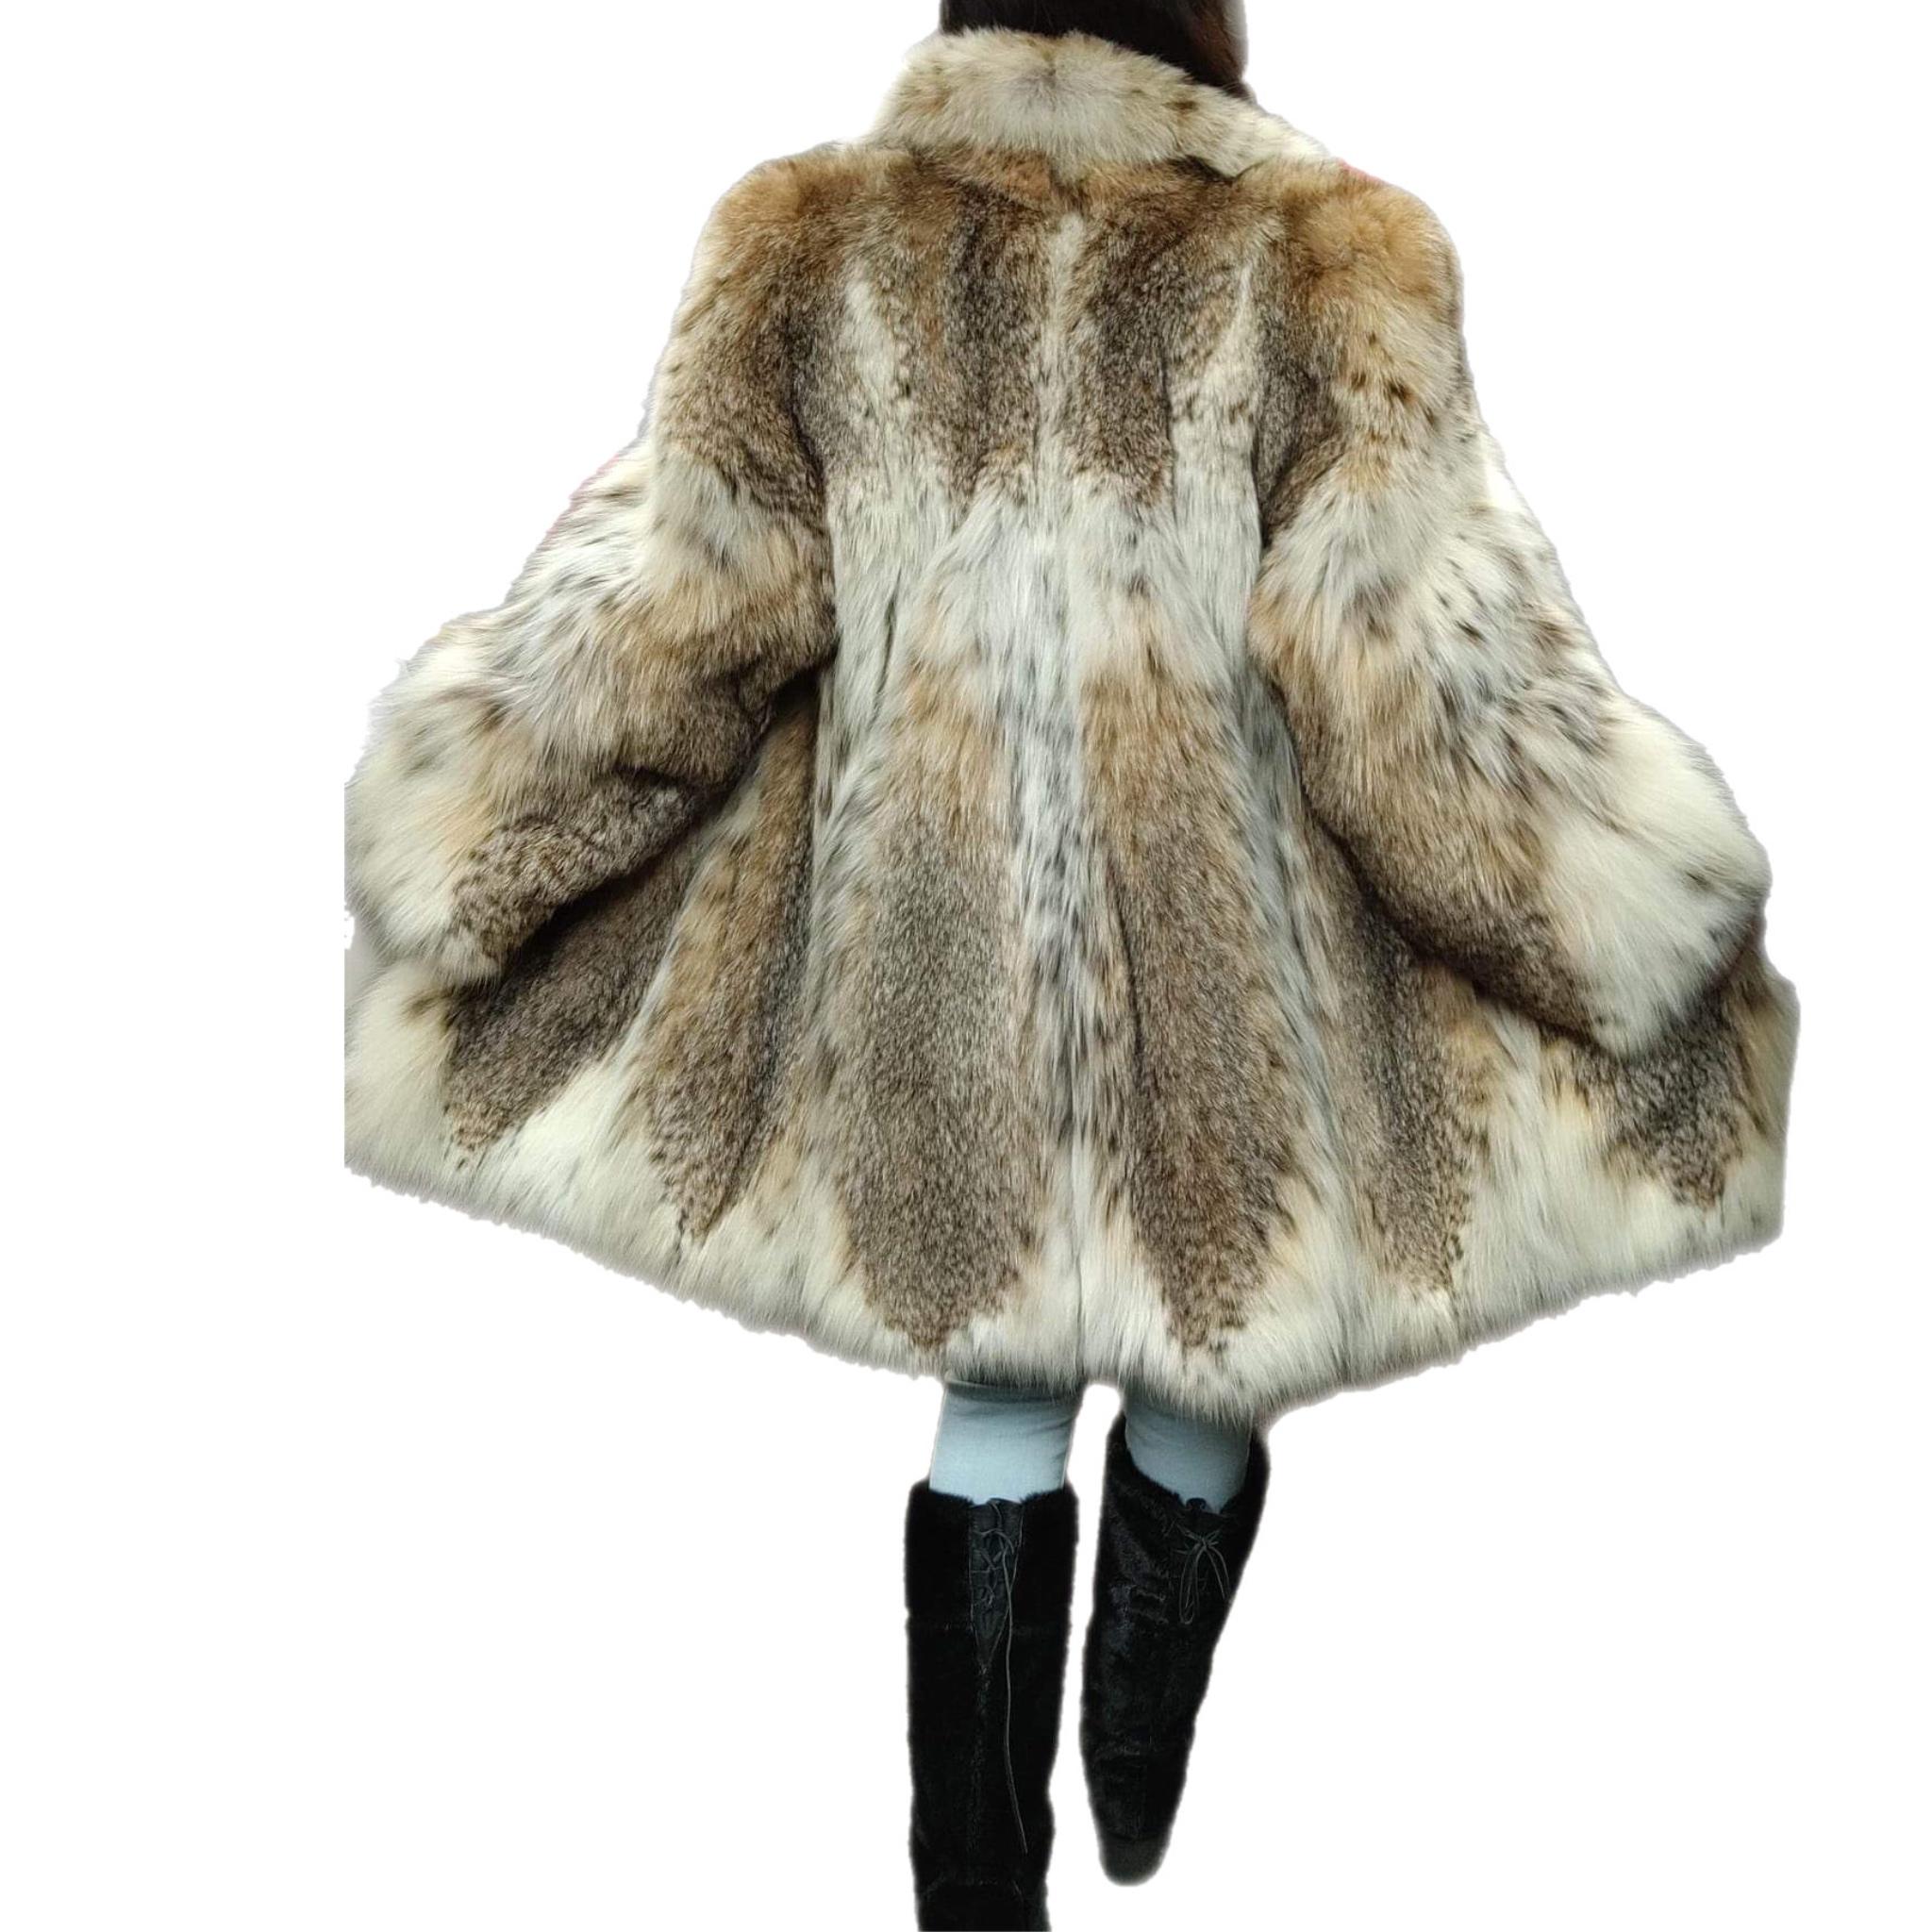 Brand new lightweight lynx fur coat size 12-14 9